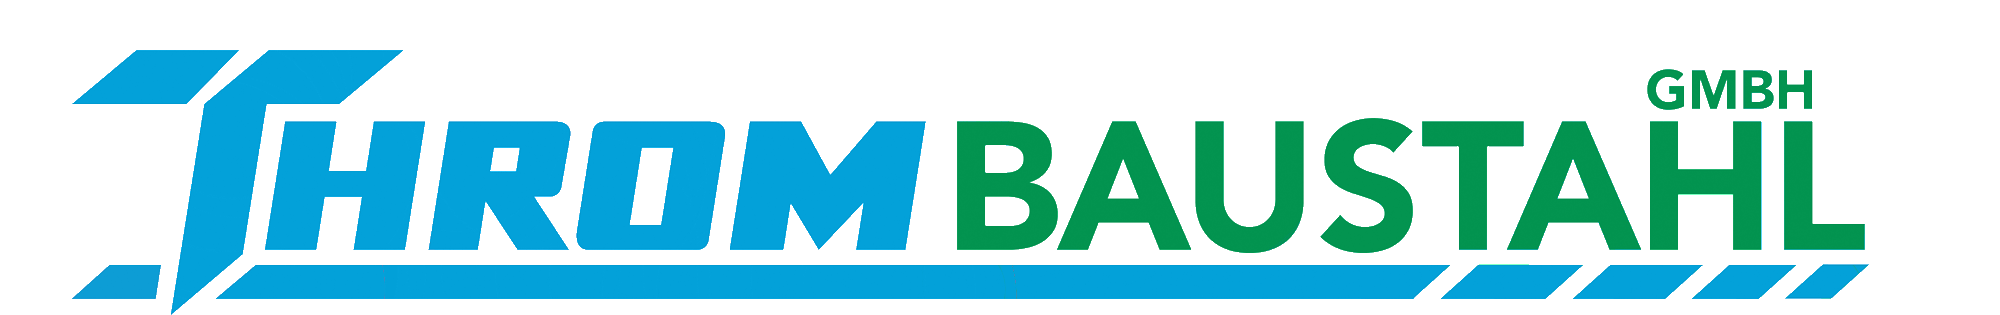 Das Logo der Throm Baustahl GmbH